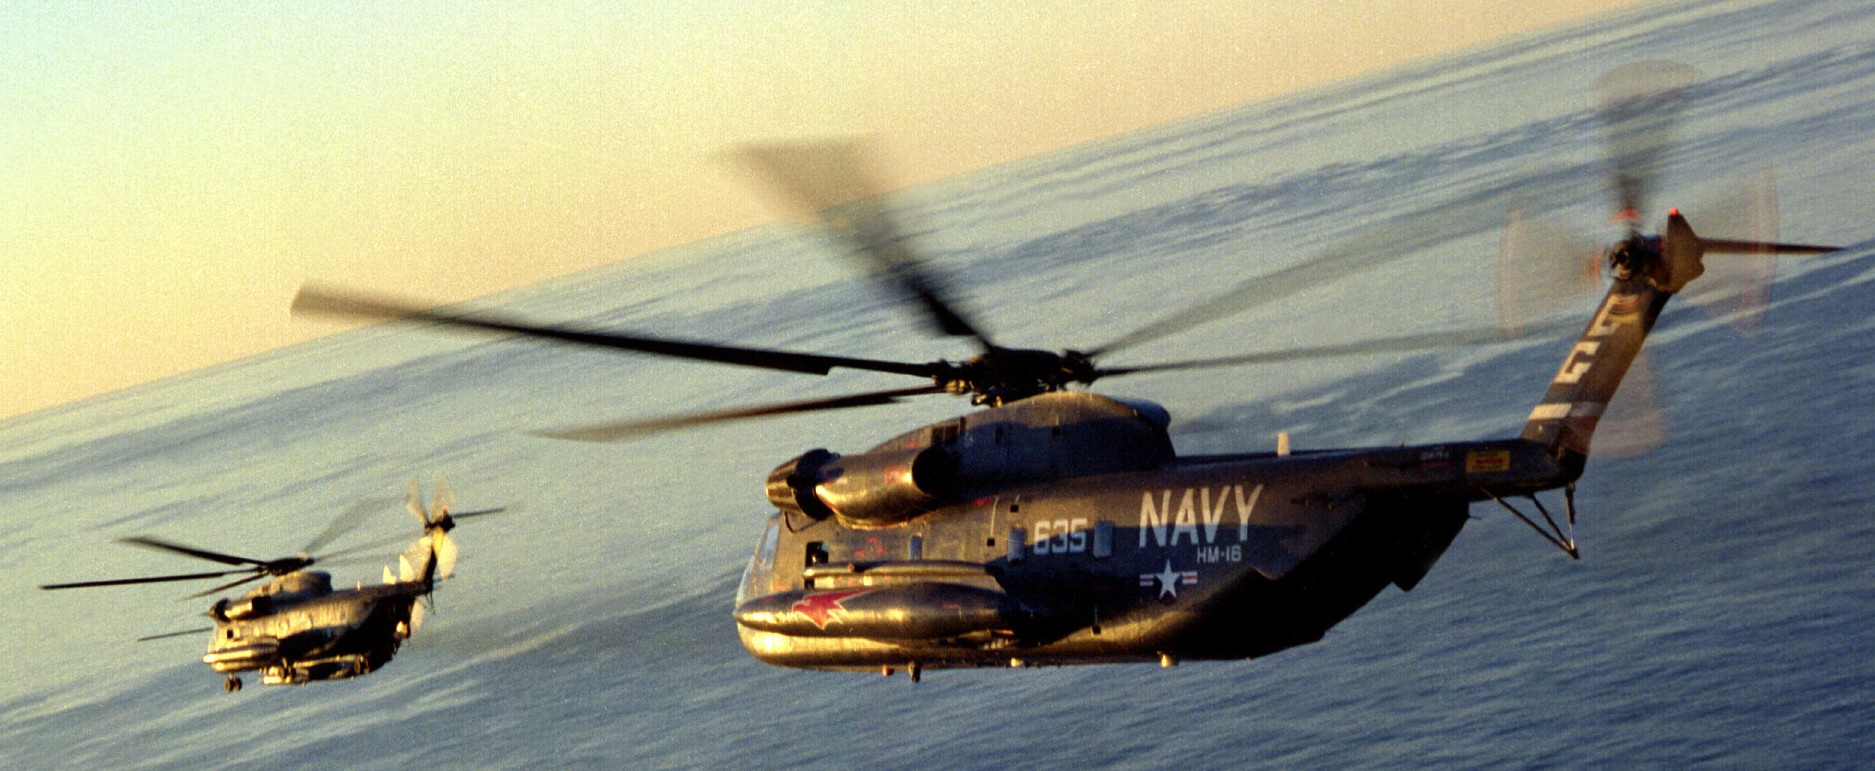 hm-16 seahawks helicopter mine countermeasures squadron navy rh-53d sea stallion 10